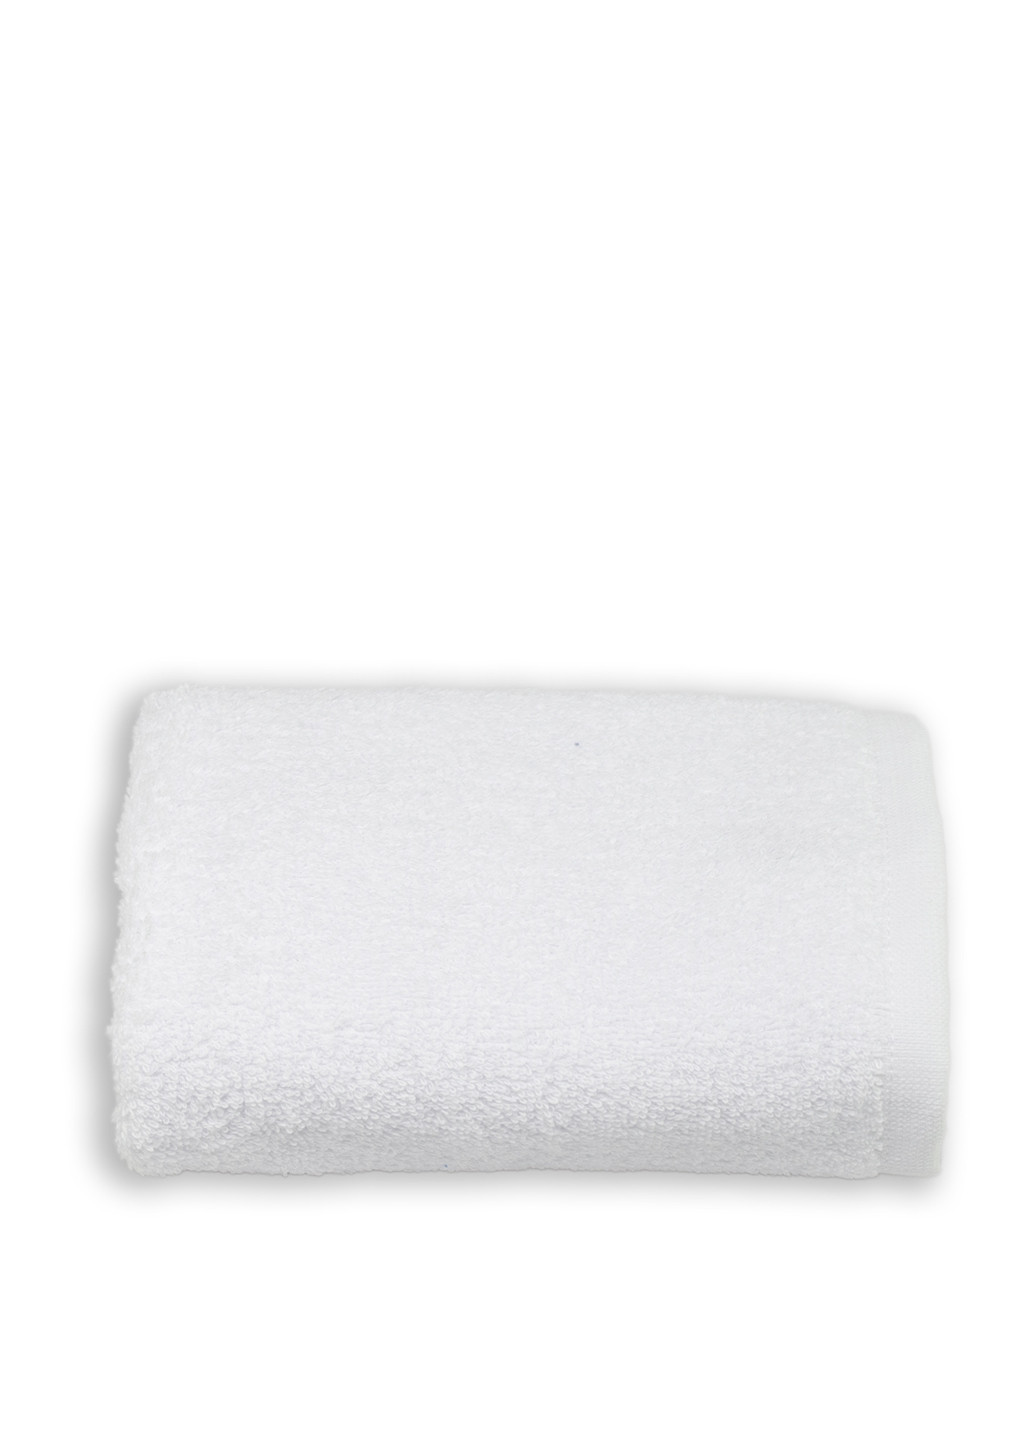 No Brand полотенце, 40х70 см однотонный белый производство - Туркменистан